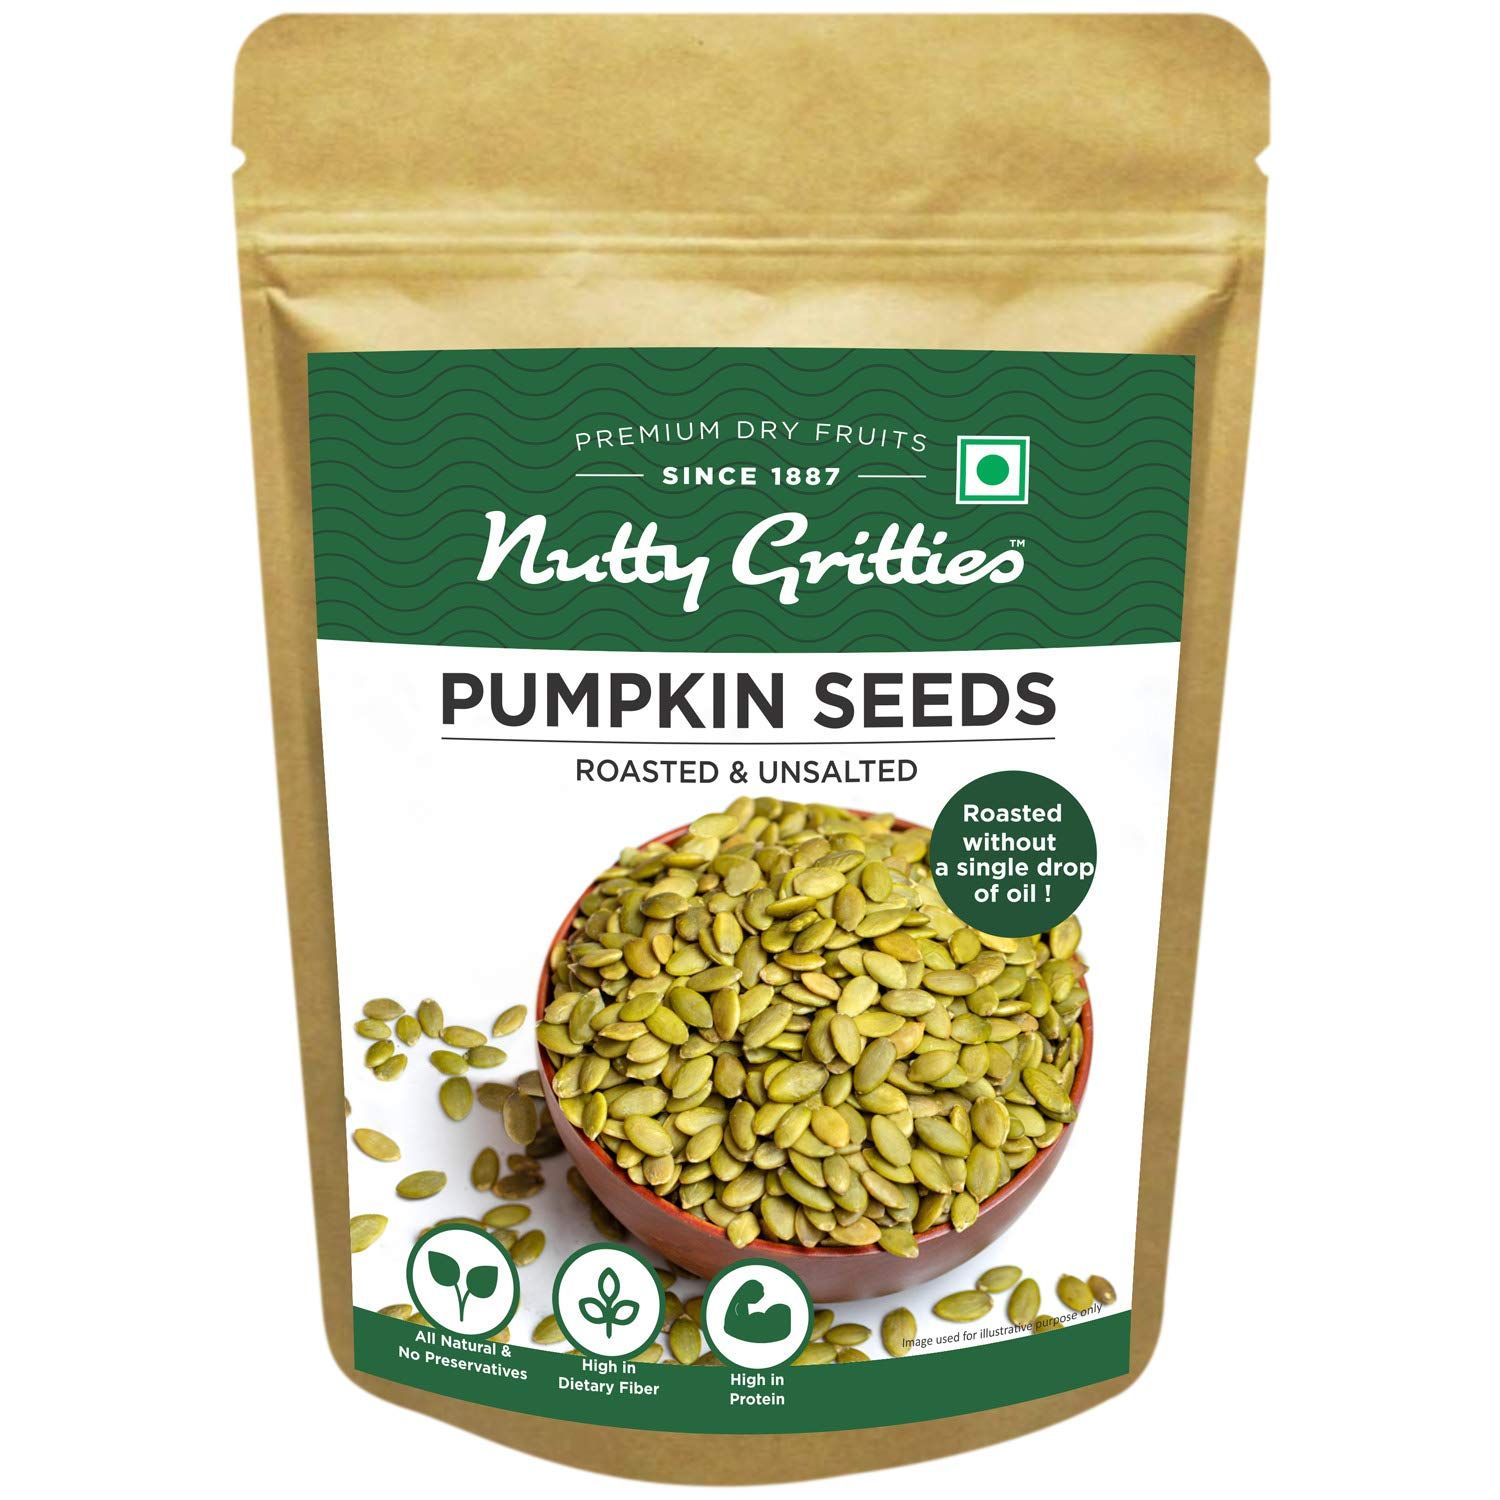 Nutty Gritties Pumpkin Seeds Image